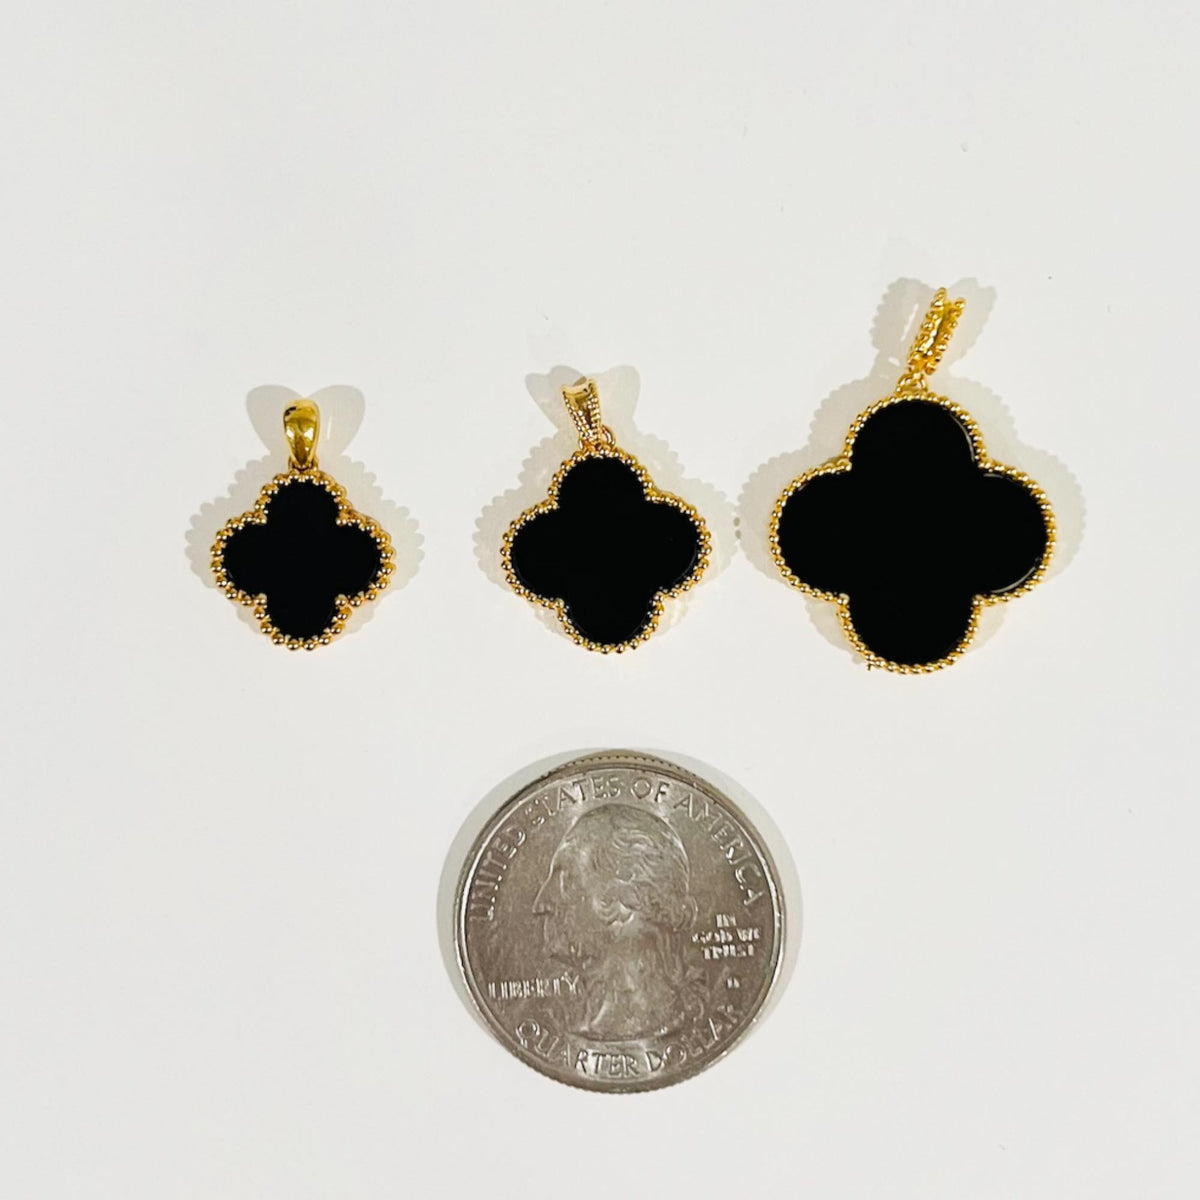 Clover 18K Gold Custom Pendant Necklace - Gold/Pavé – Early Black